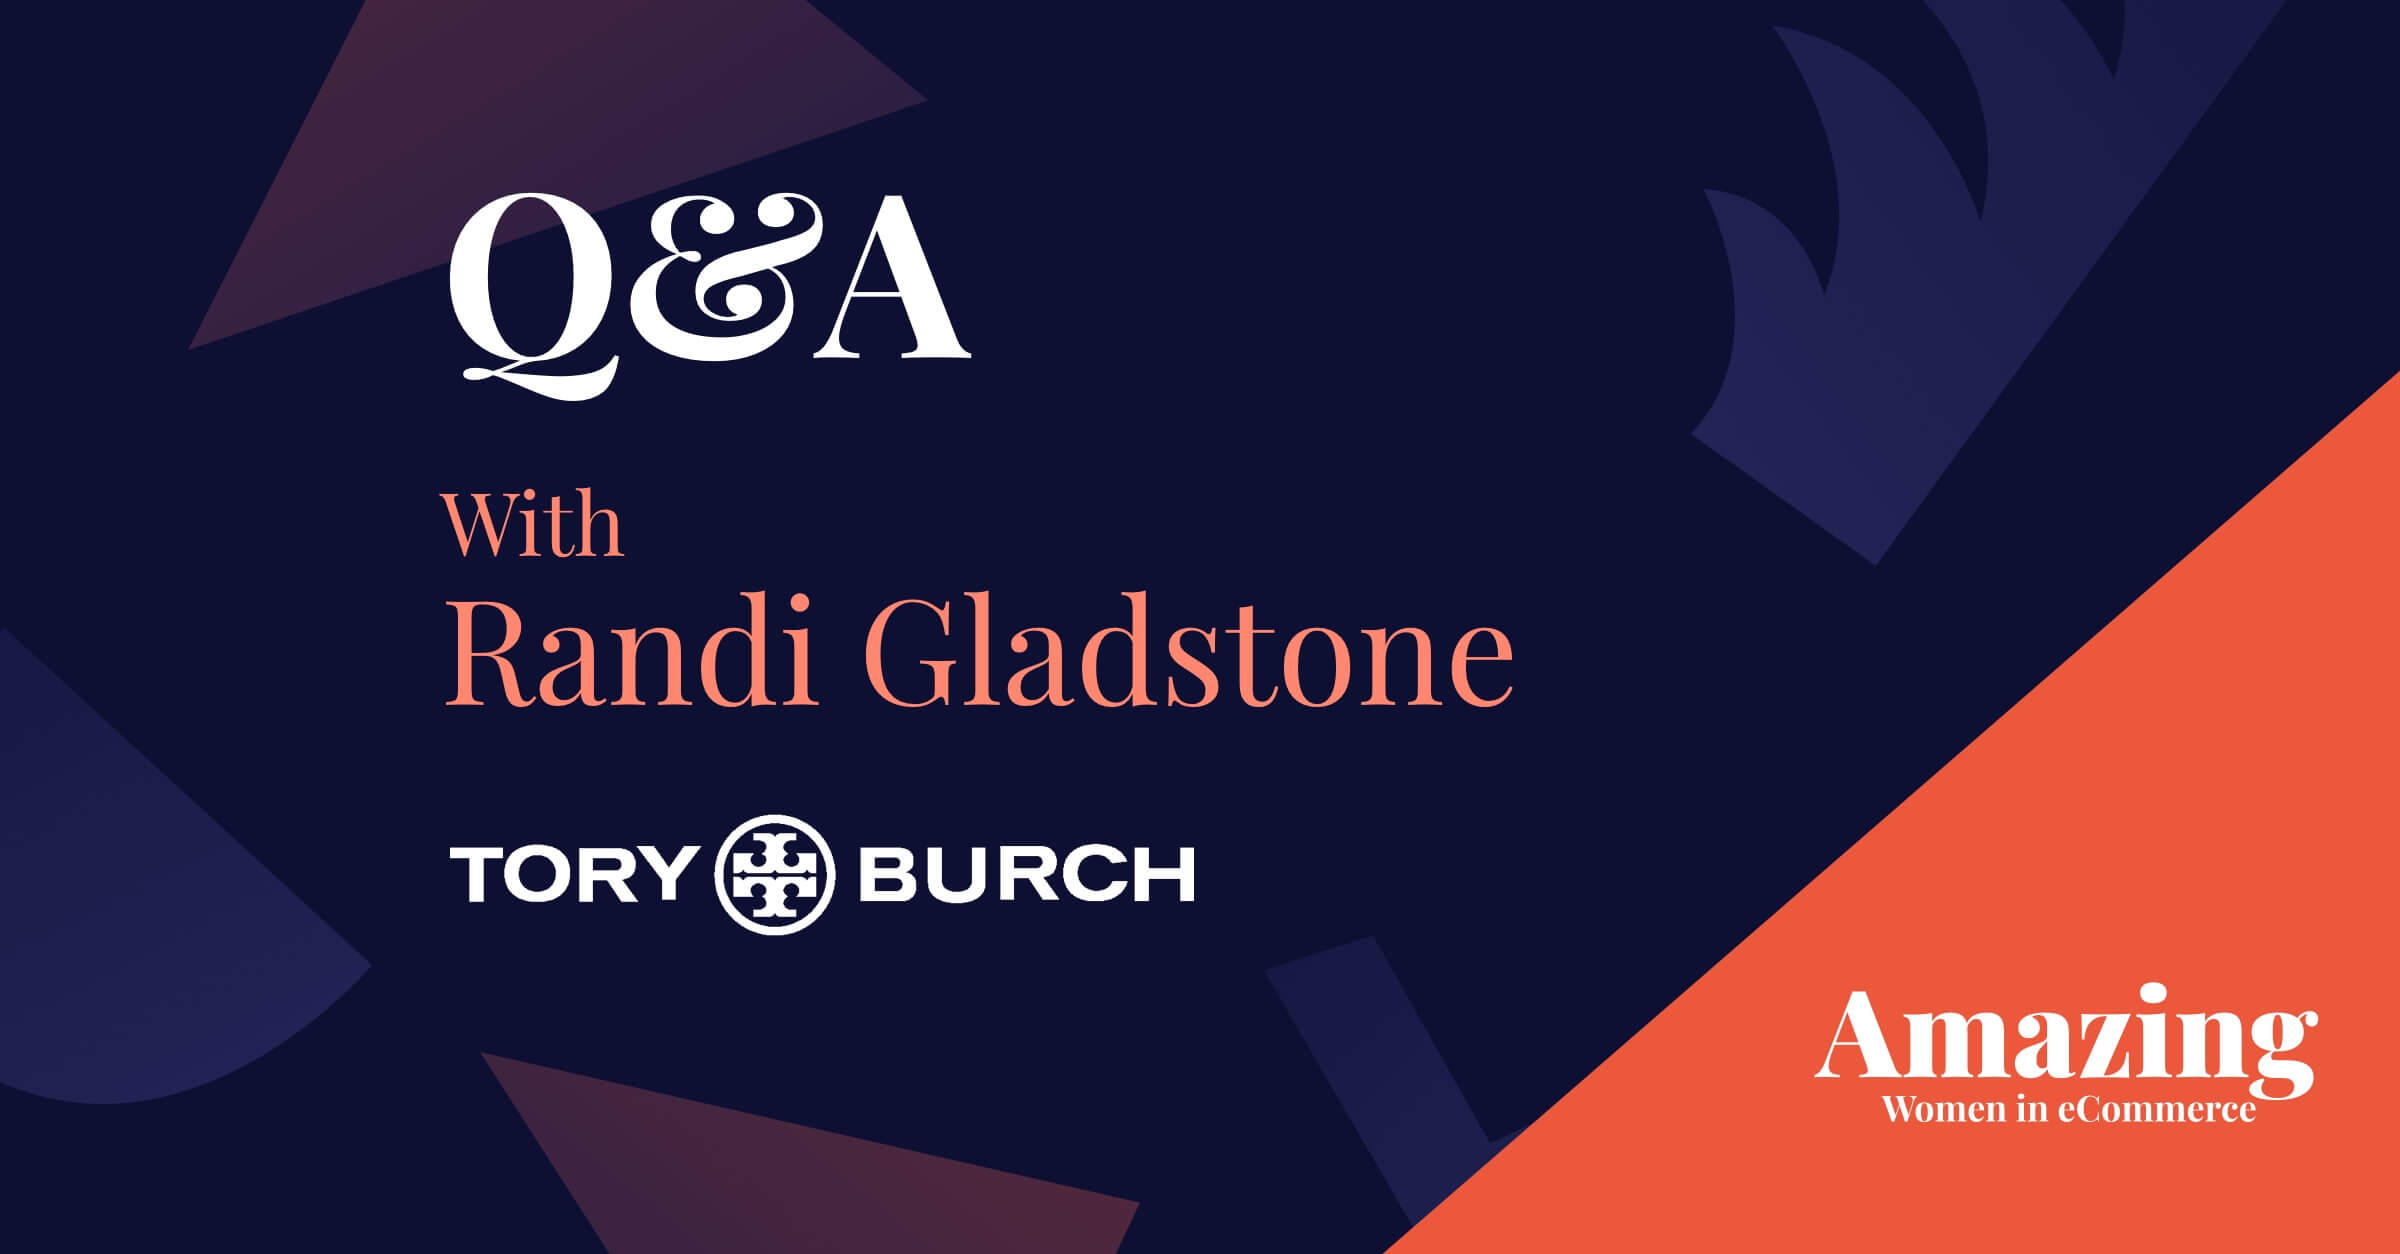 Q&A with Randi Gladstone, Tory Burch | Yotpo